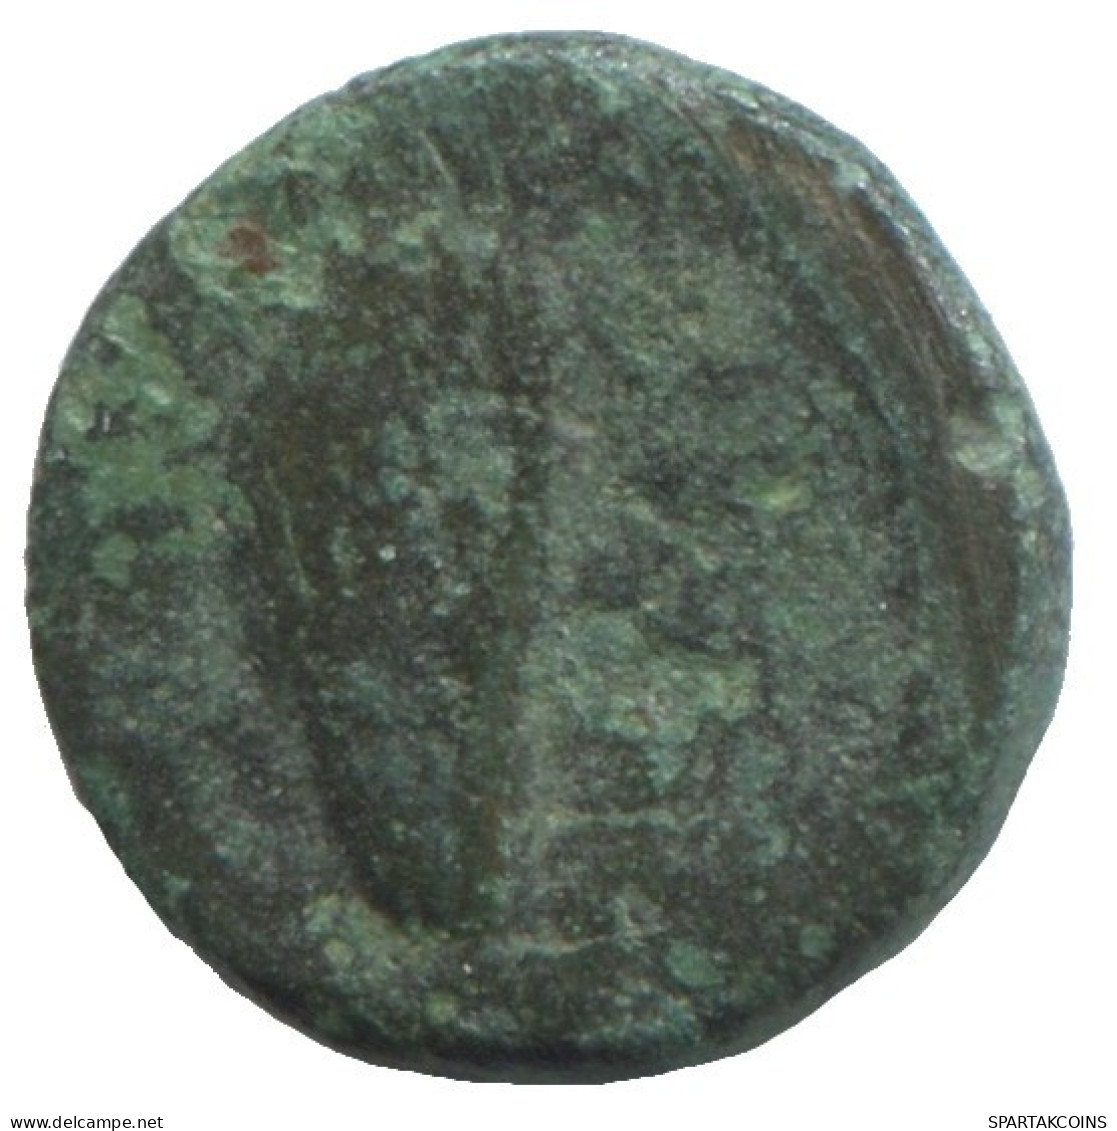 Ancient Antike Authentische Original GRIECHISCHE Münze 1.6g/11mm #SAV1204.11.D.A - Grecques